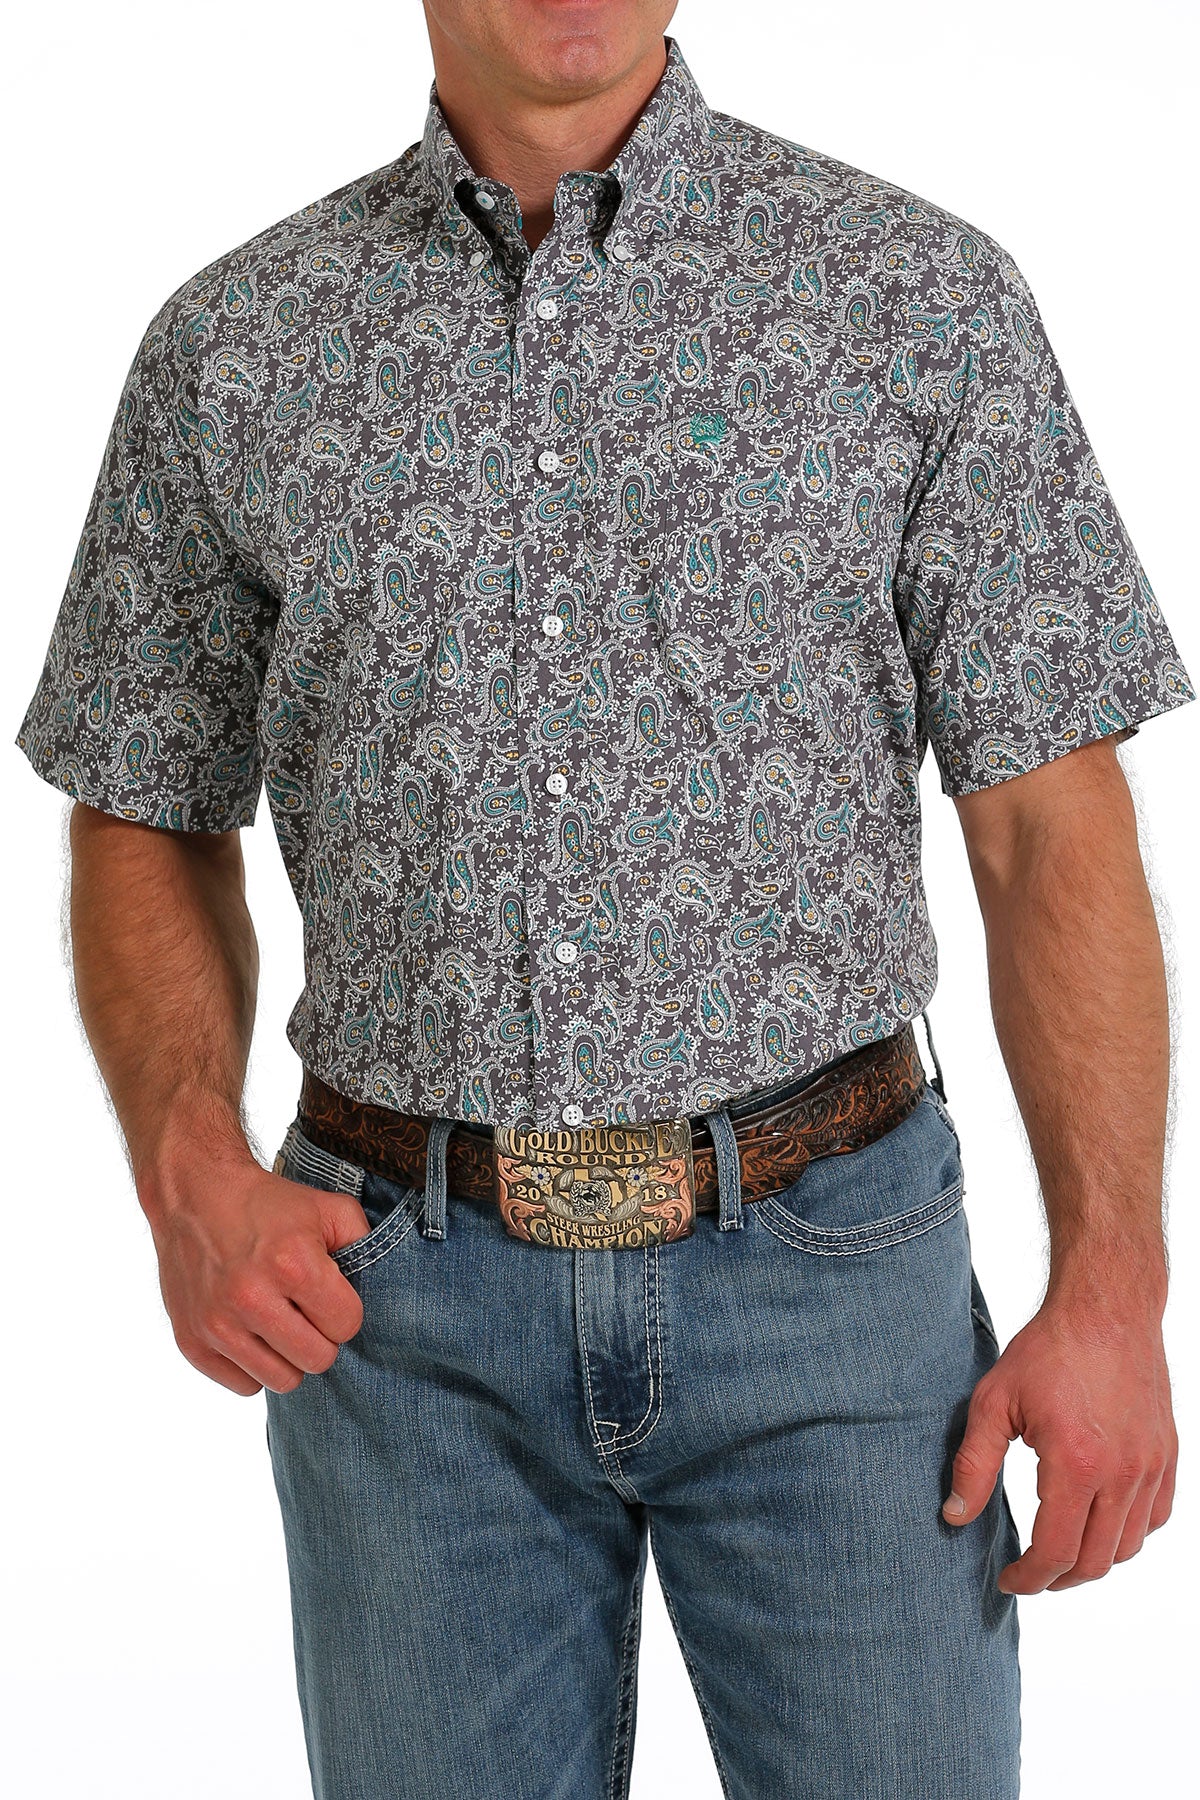 Men's Cinch Paisley Grey/Turquoise Button Down Shirt